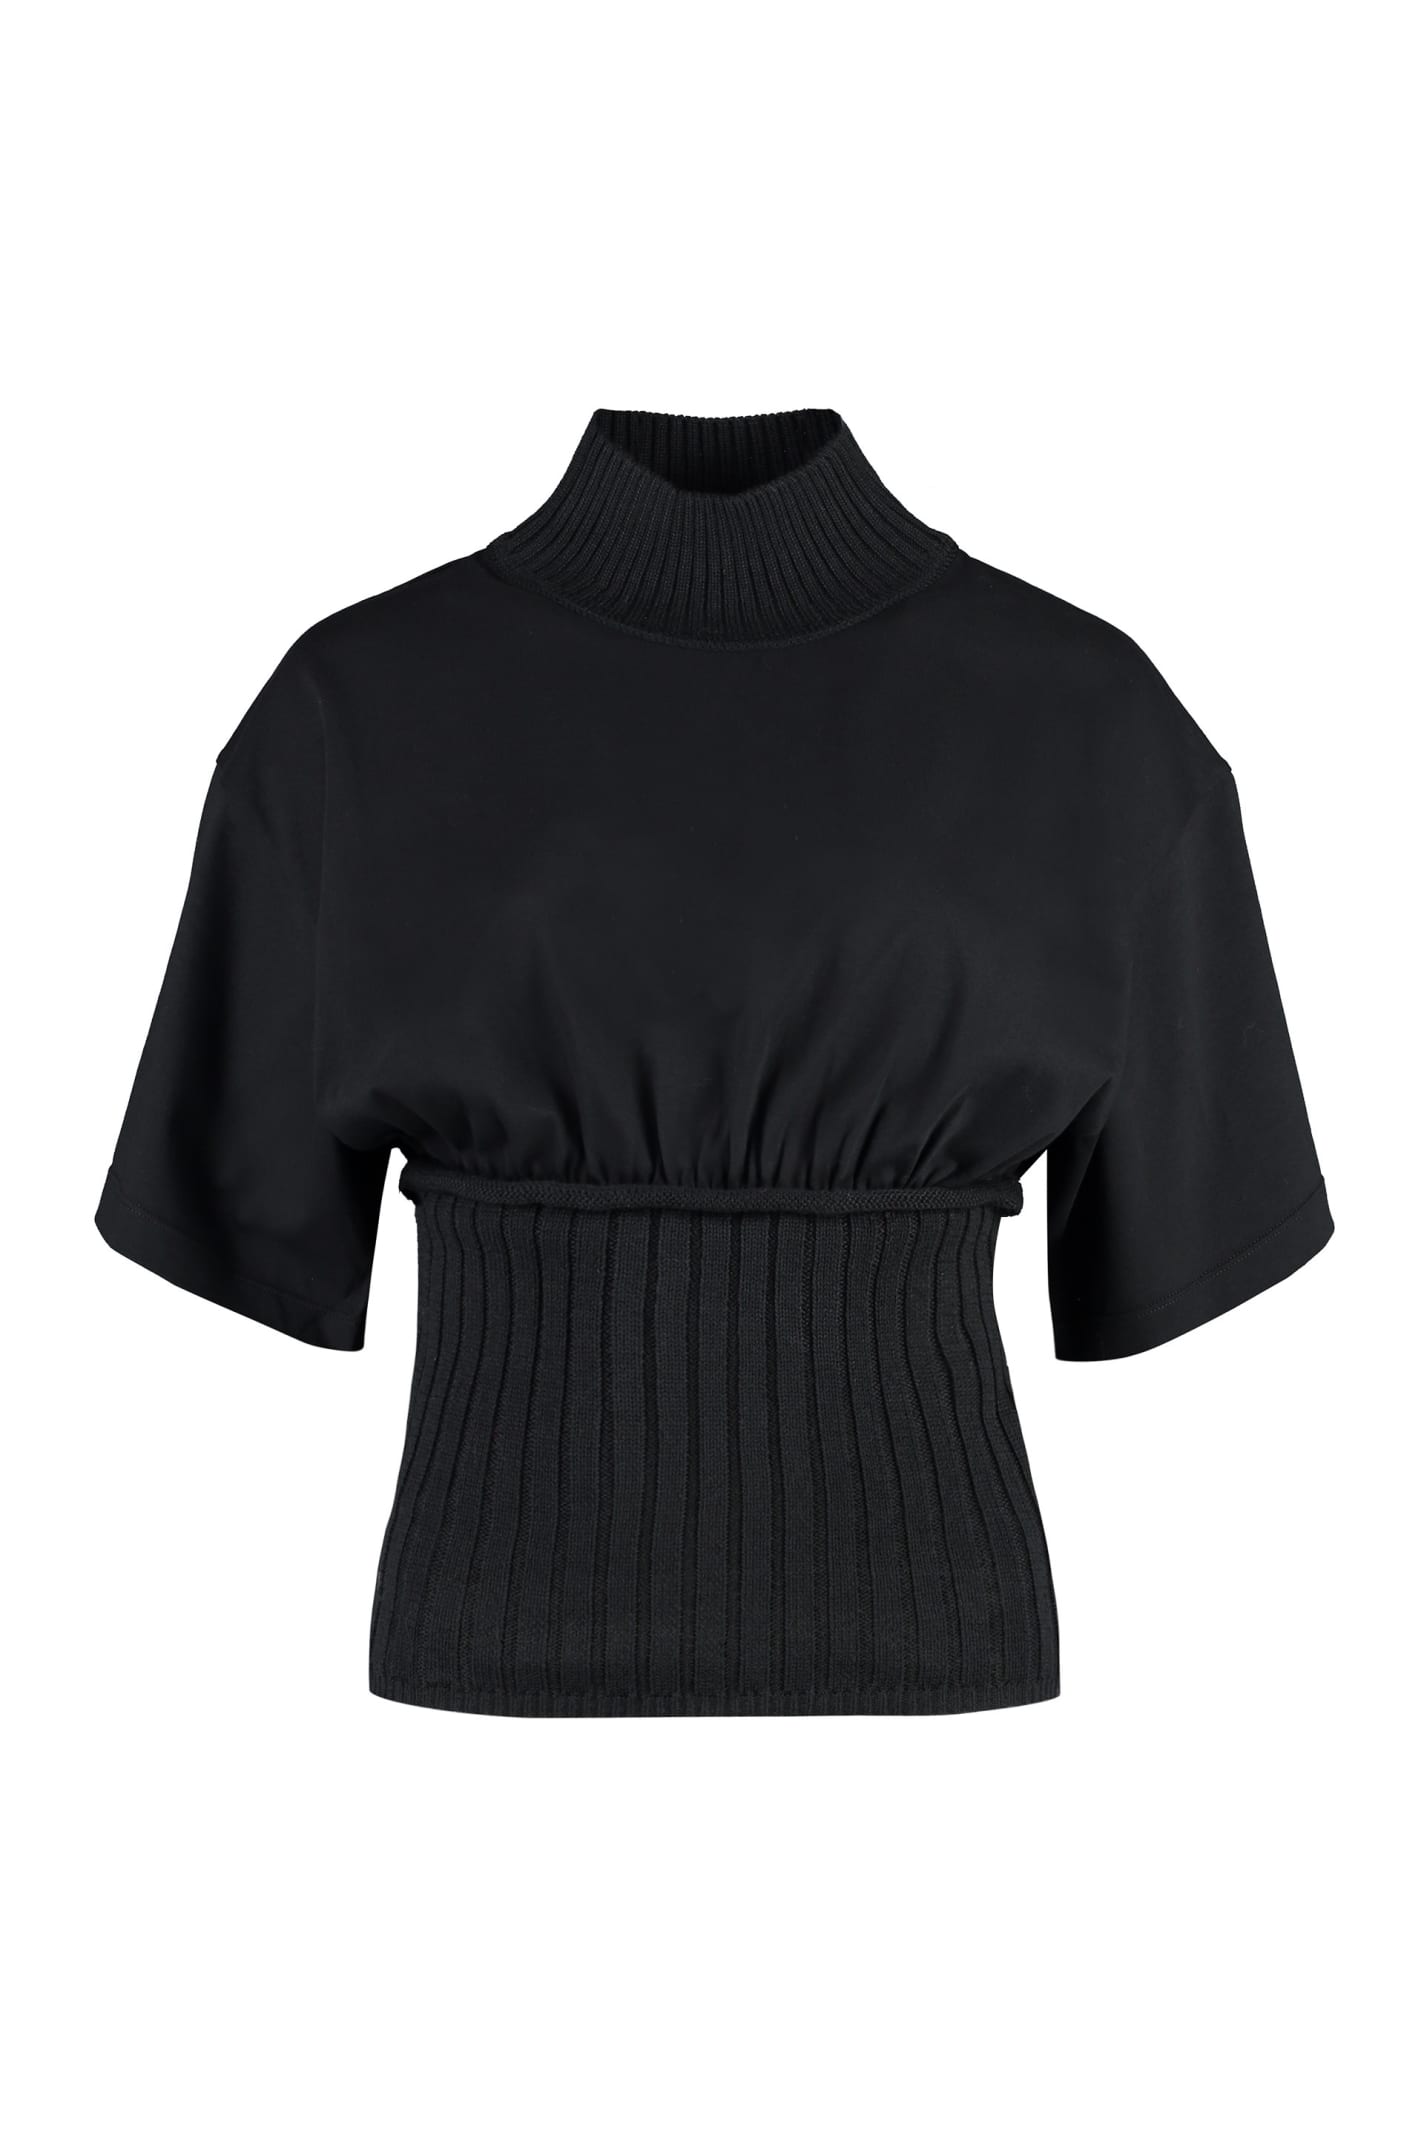 Mm6 Maison Margiela Wool Blend T-shirt In Black